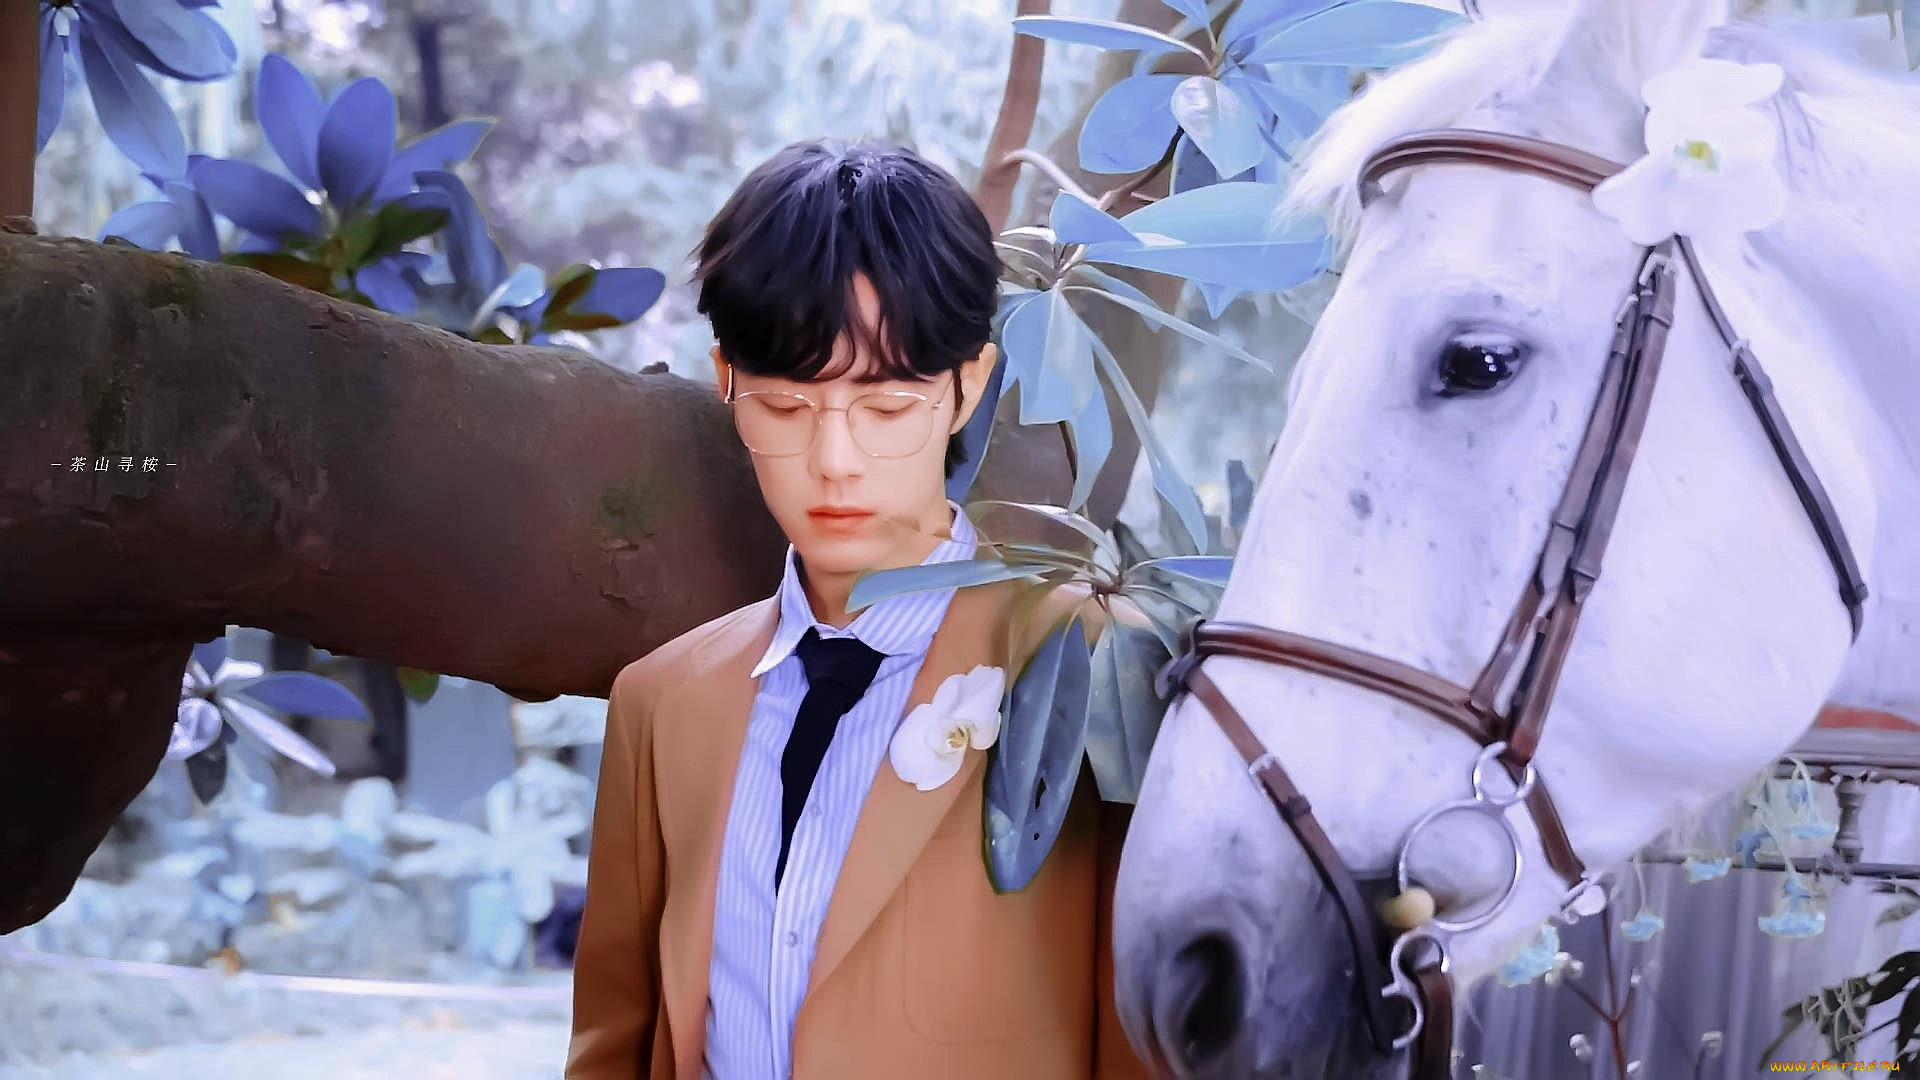 мужчины, xiao, zhan, актер, очки, лошадь, дерево